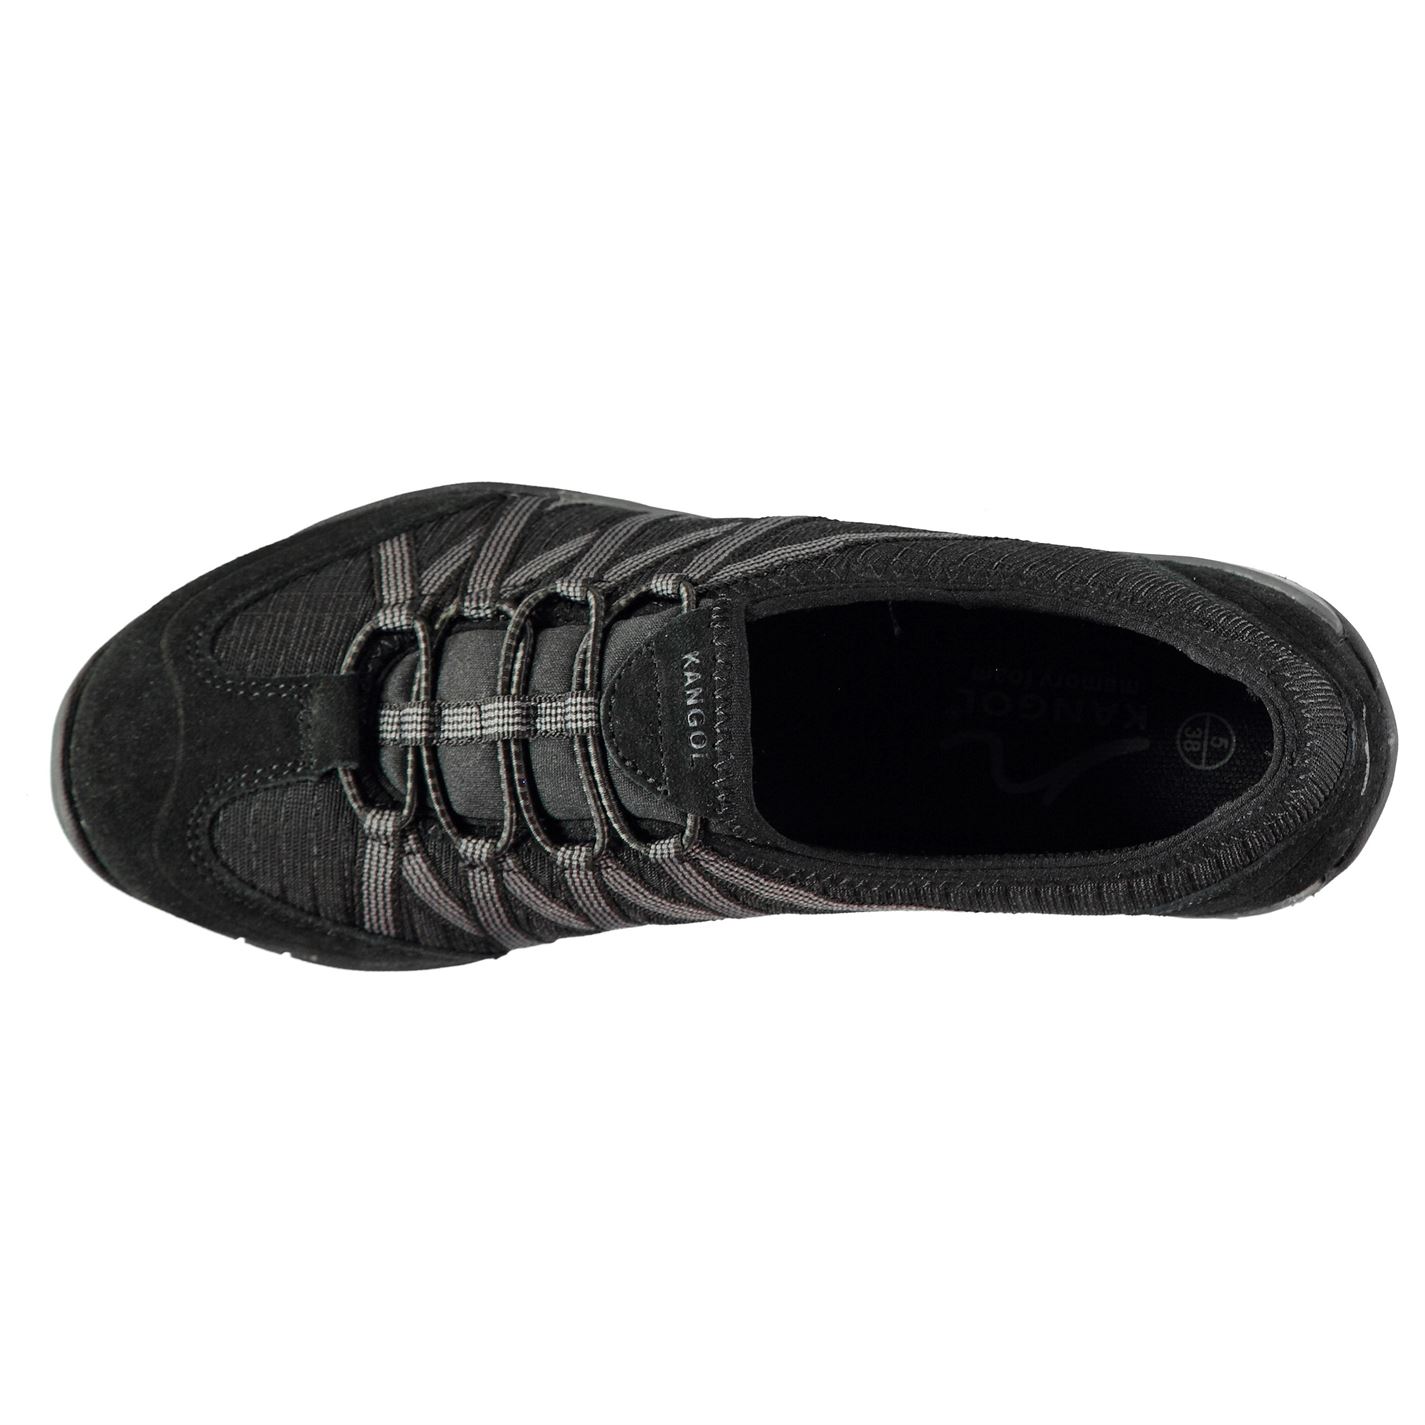 Kangol Womens Erin Bungee Shoes Casual Slip On Trainers Memory Foam ...